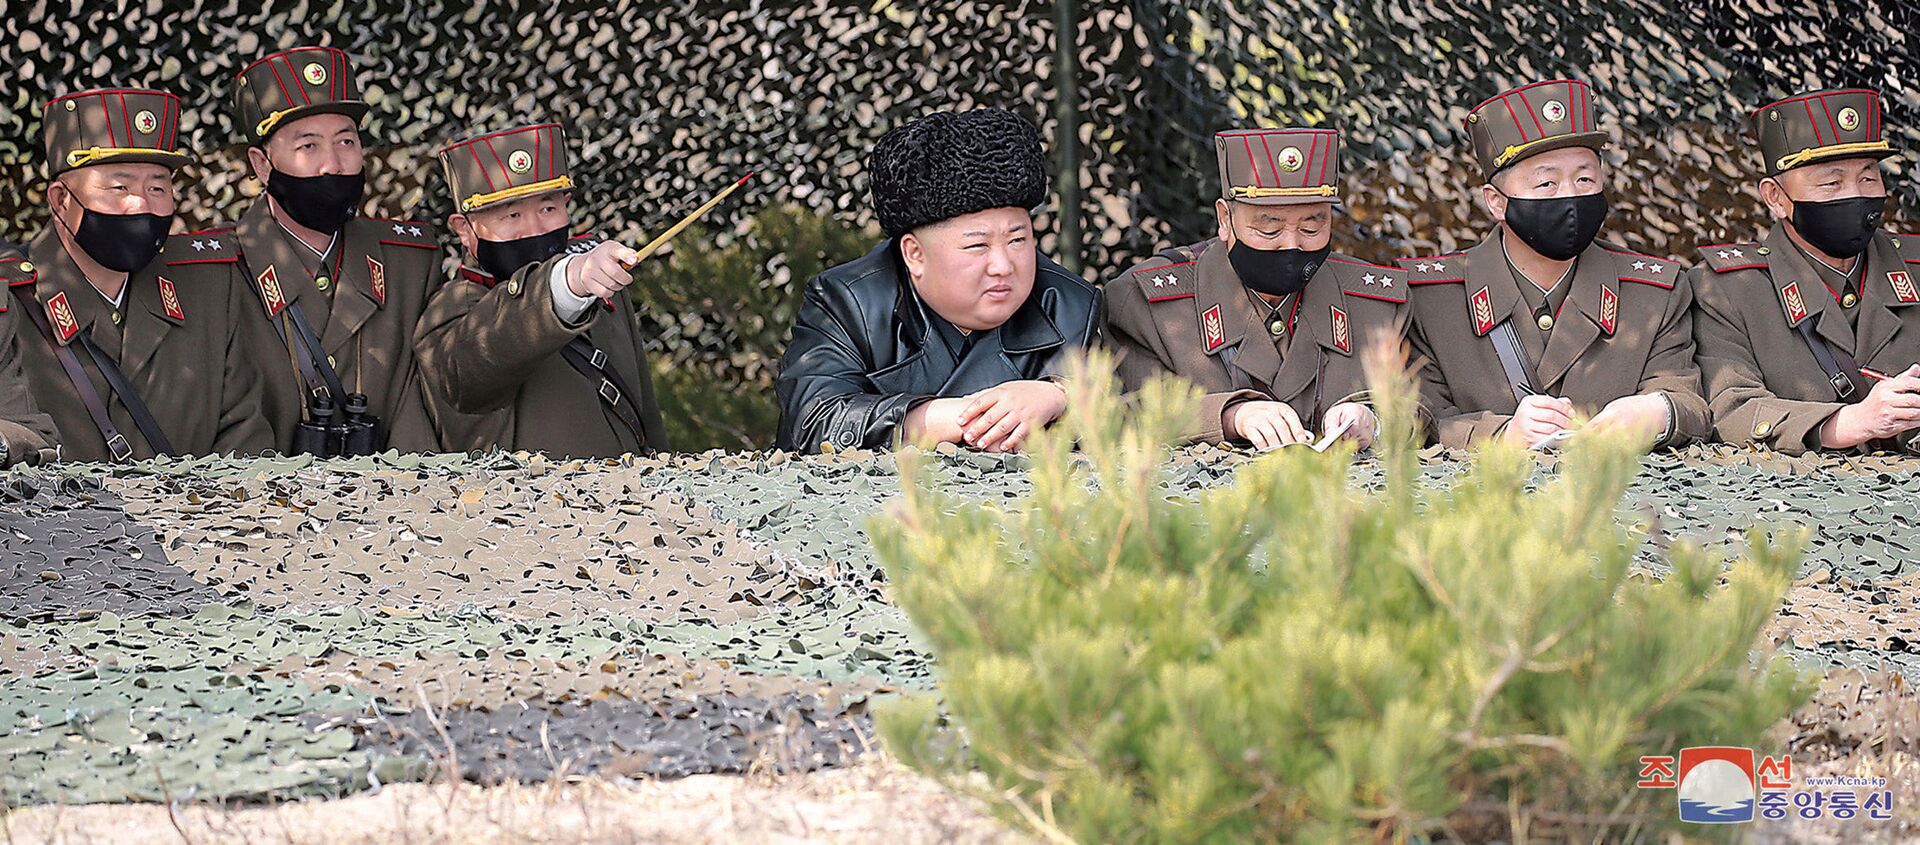 El líder de Corea del Norte, Kim Jong-un, observa los ejercicios militares - Sputnik Mundo, 1920, 19.03.2020